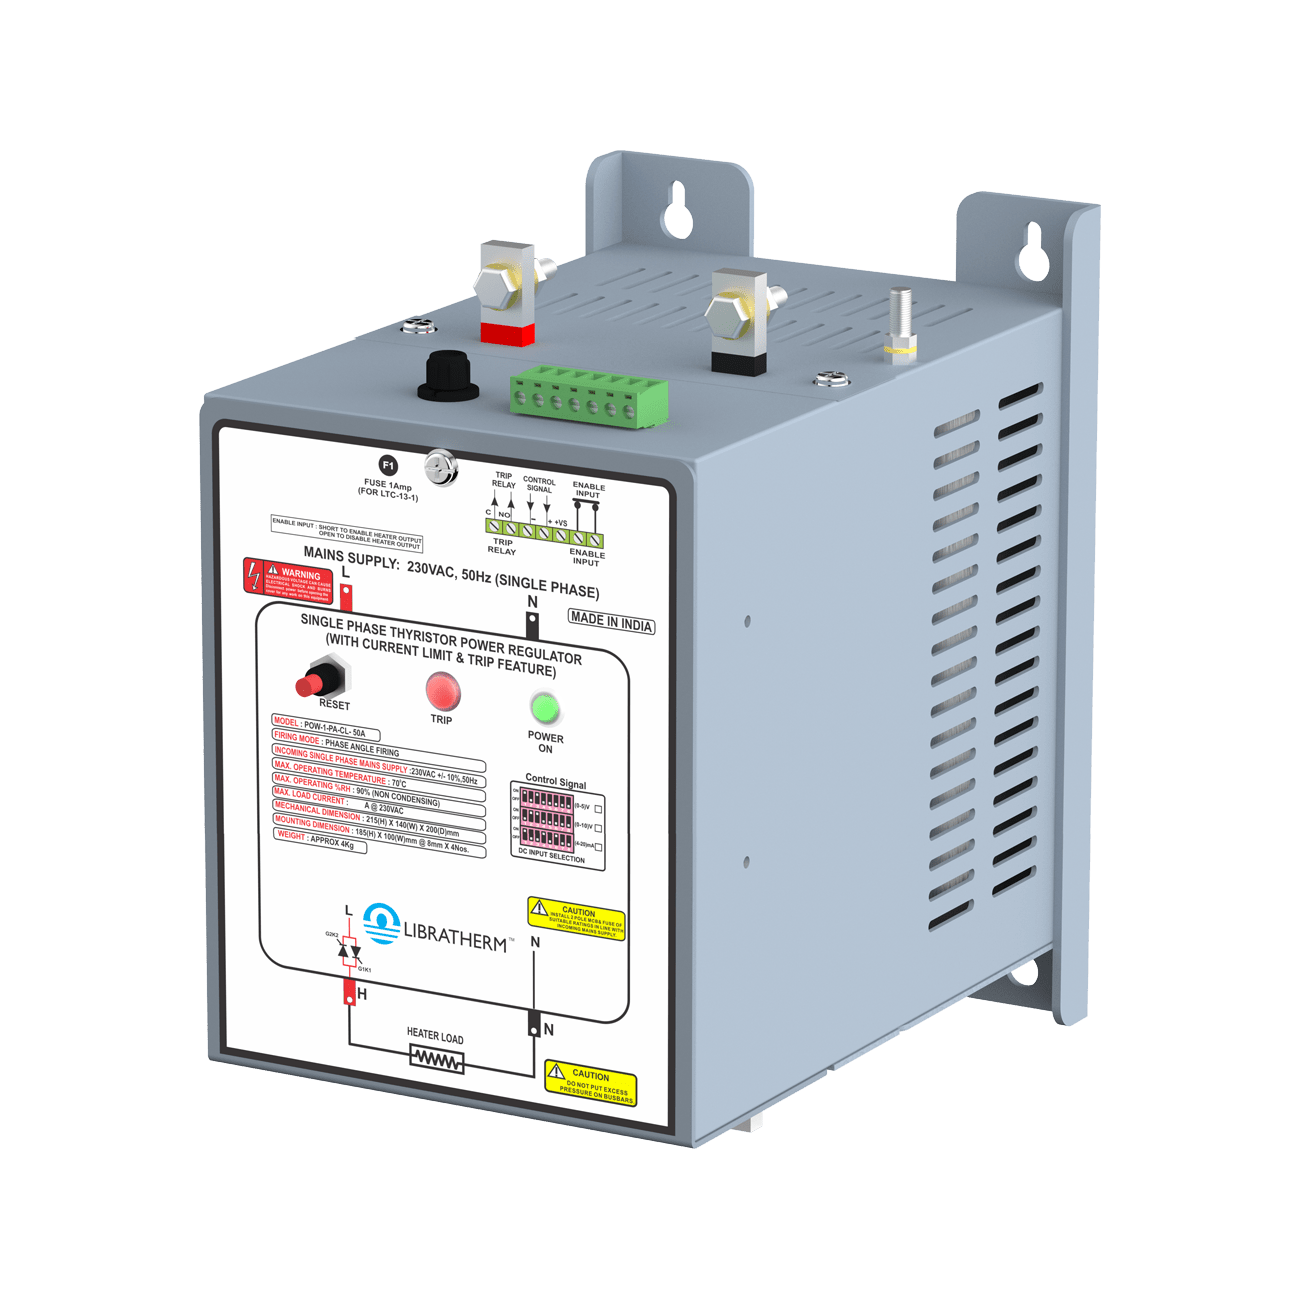 Single Phase Thyristor Power Controller – POW-1-PA-CL – Libratherm 